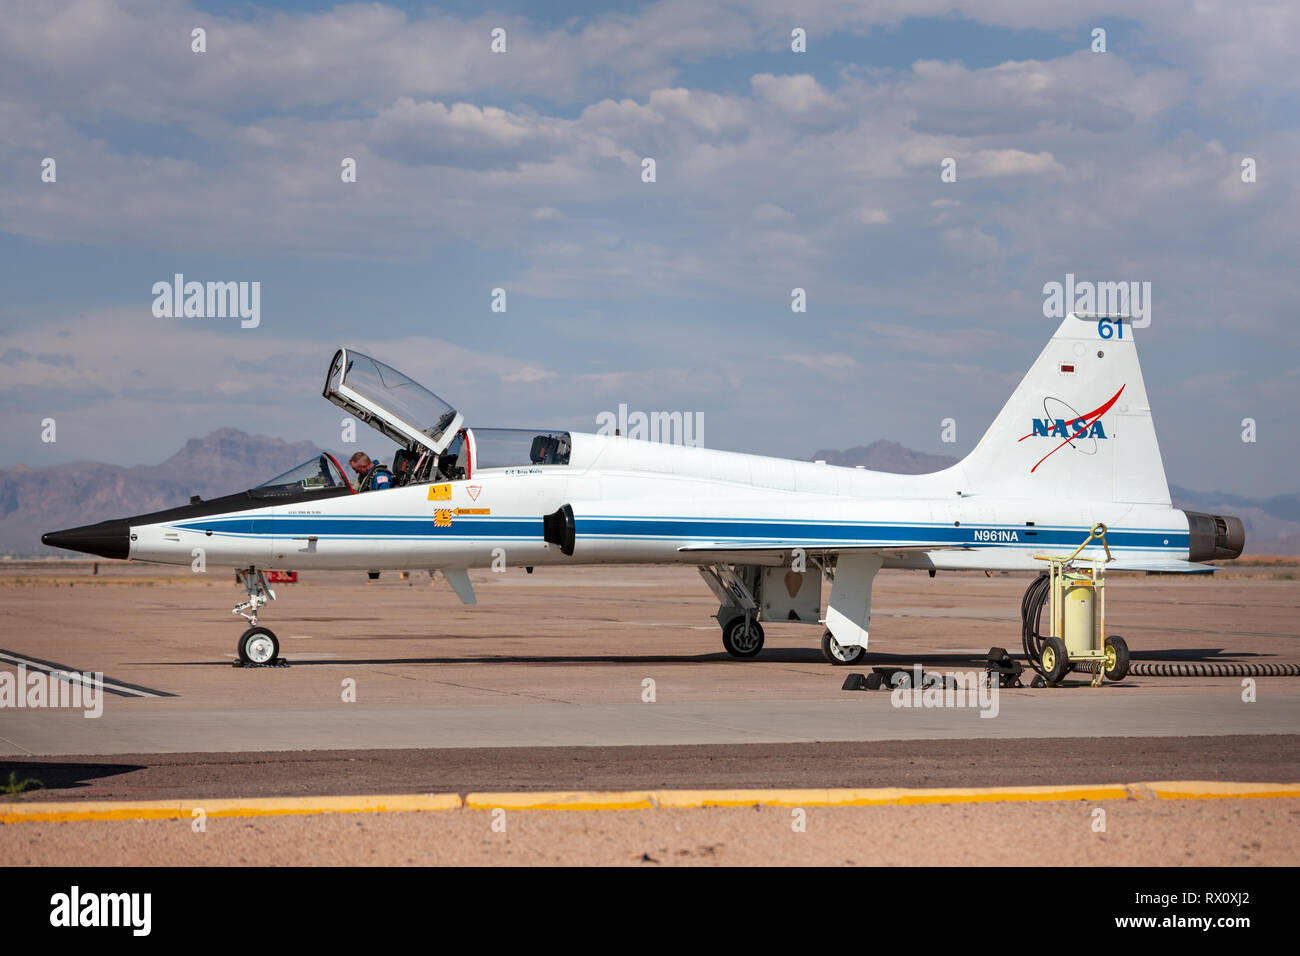 NASA (National Aeronautics and Space Administration) Northrop T-38 Talon jet aircraft N961NA at Phoenix-Mesa Gateway airport in Arizona. Stock Photo